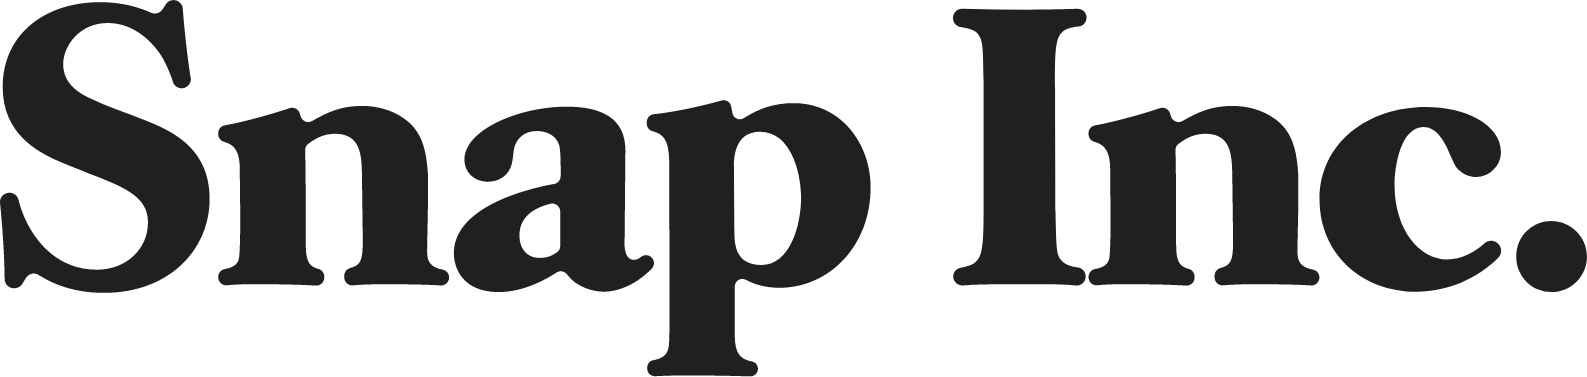 Snap logo large (transparent PNG)